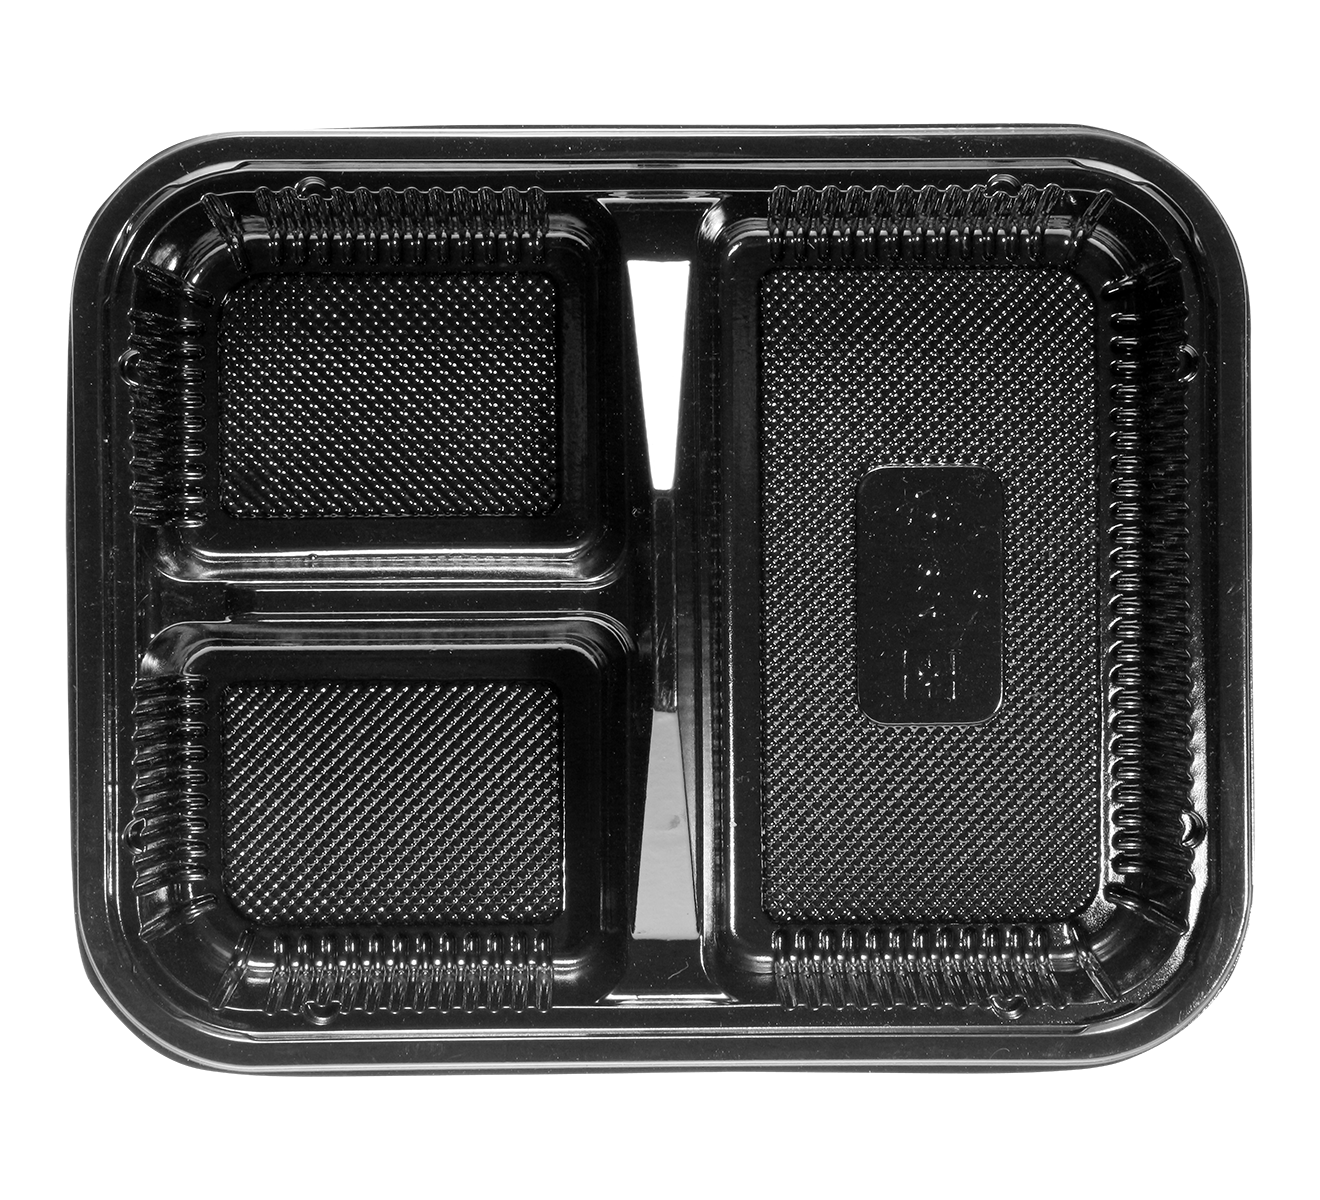 3 Compartment Meal Prep Bento Box